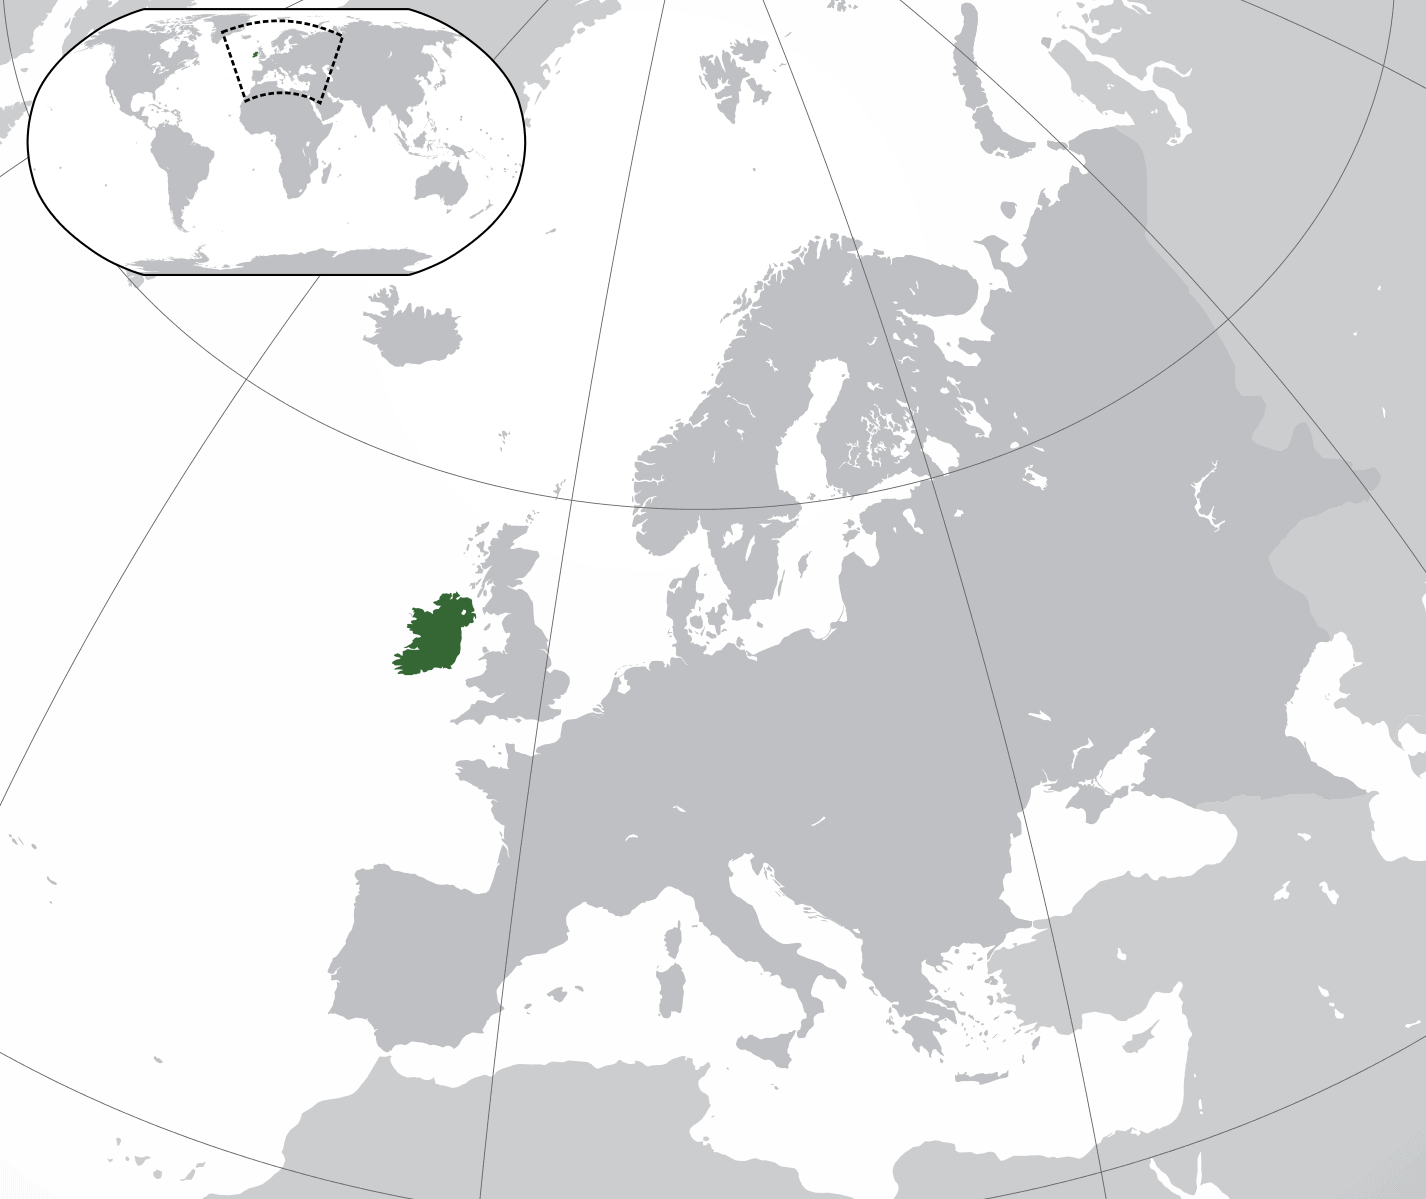 Republic of Ireland map